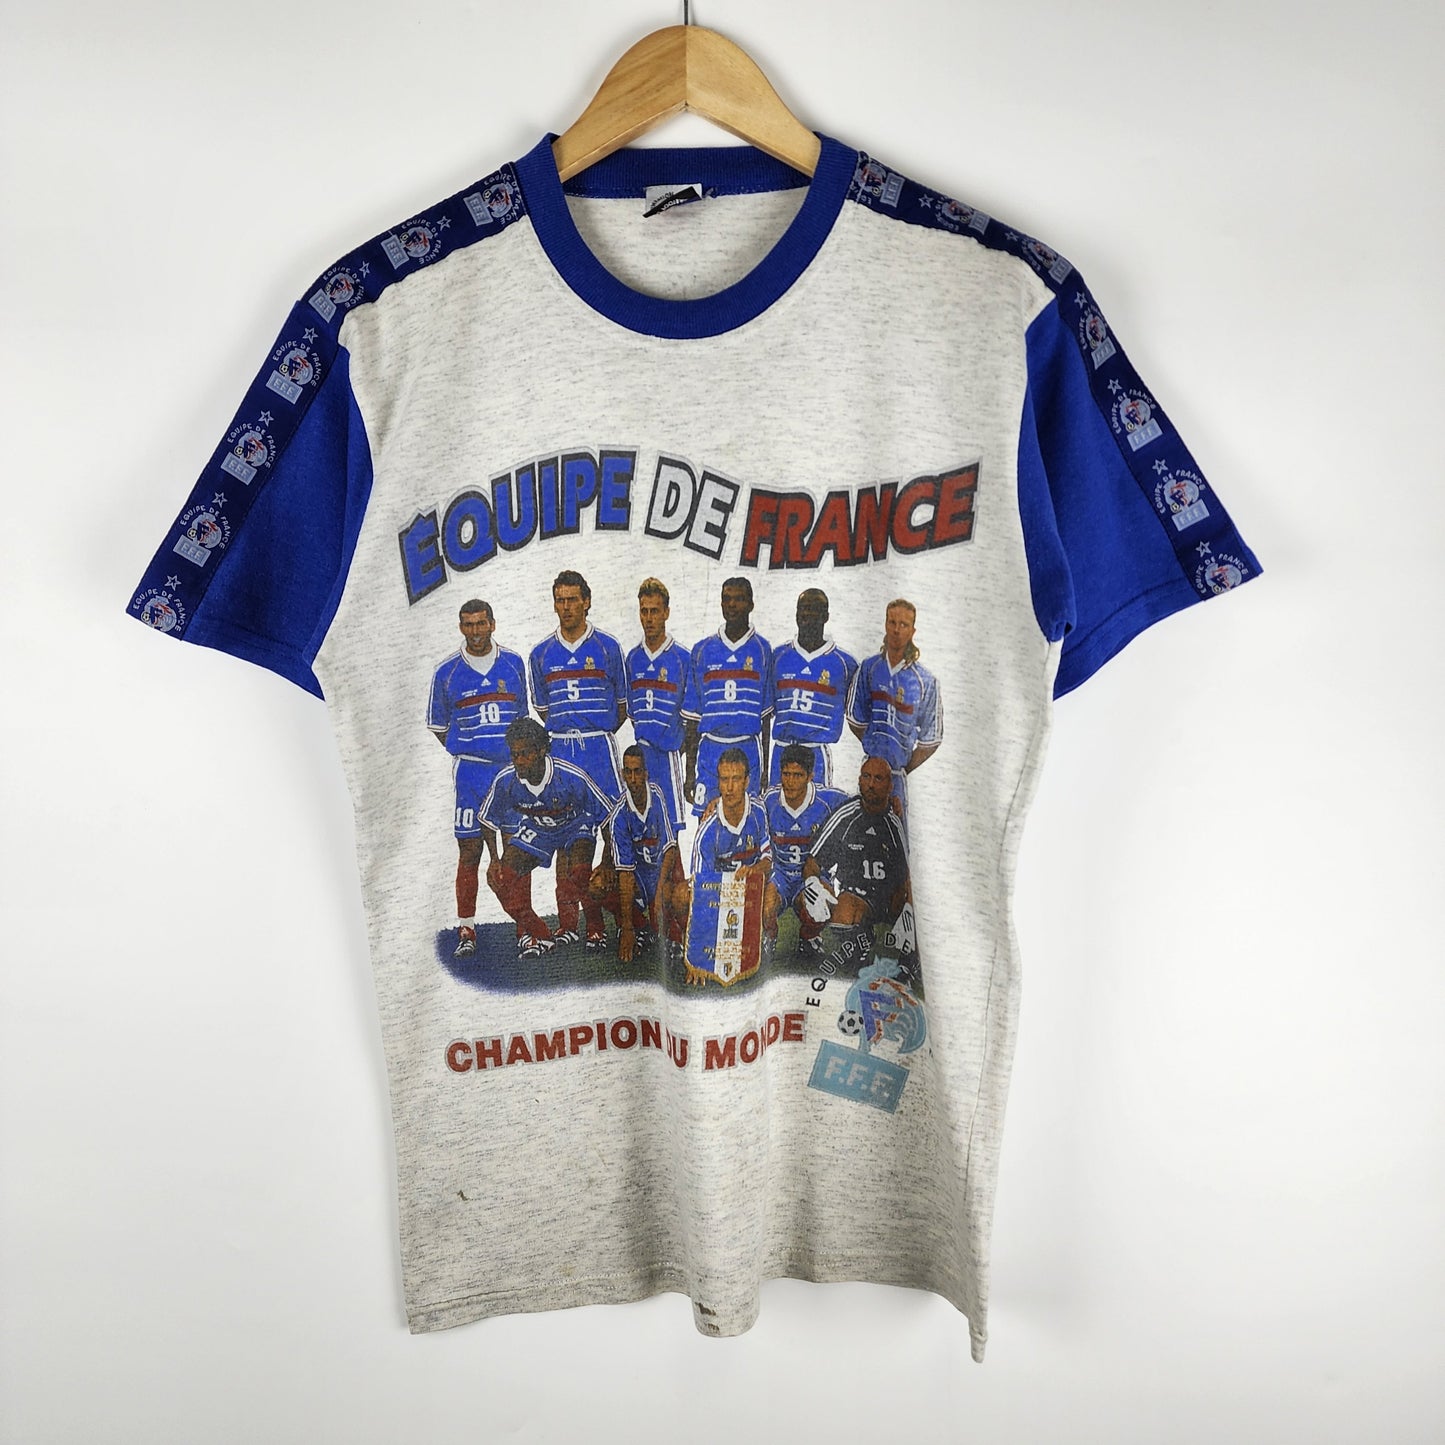 Vintage France Football Team 90s T-shirt 